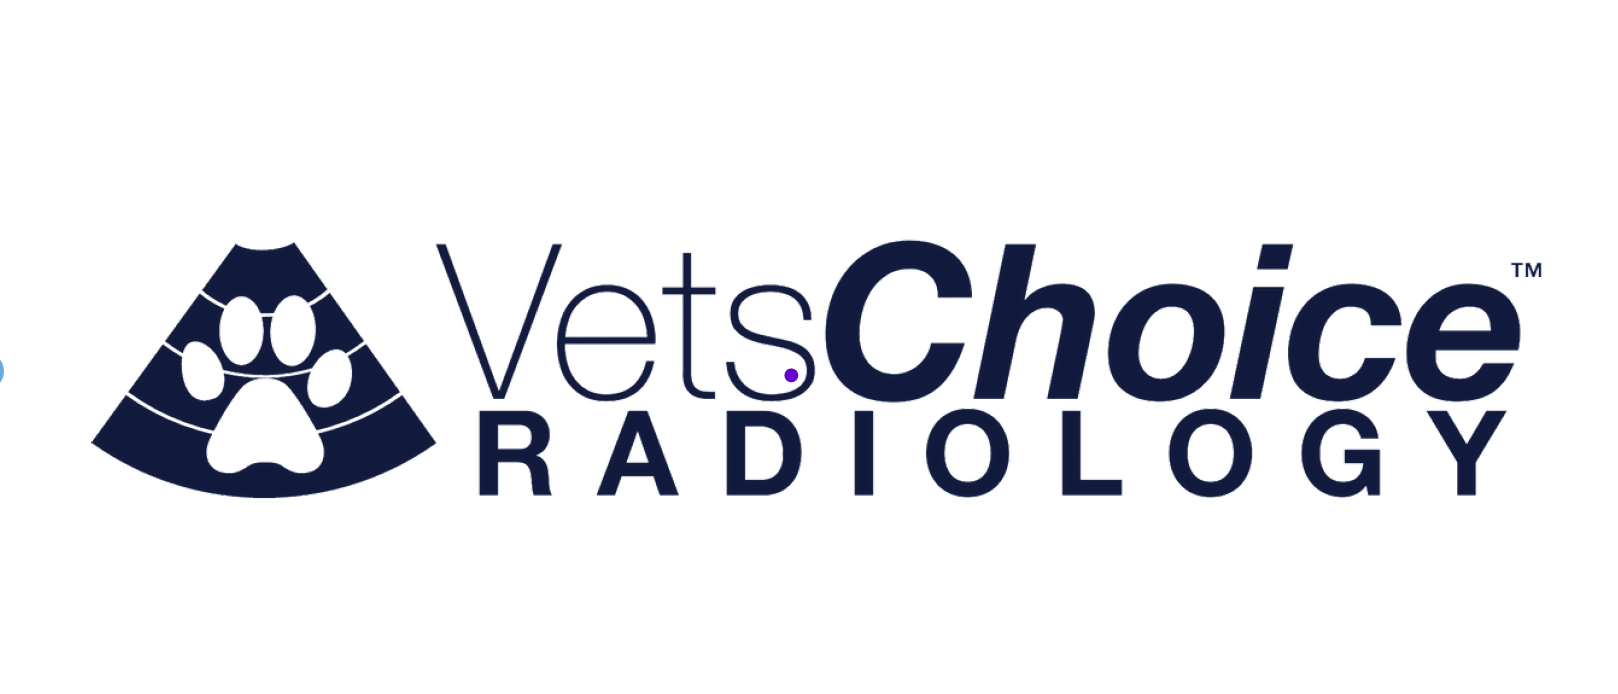 Vets Choice Radiology